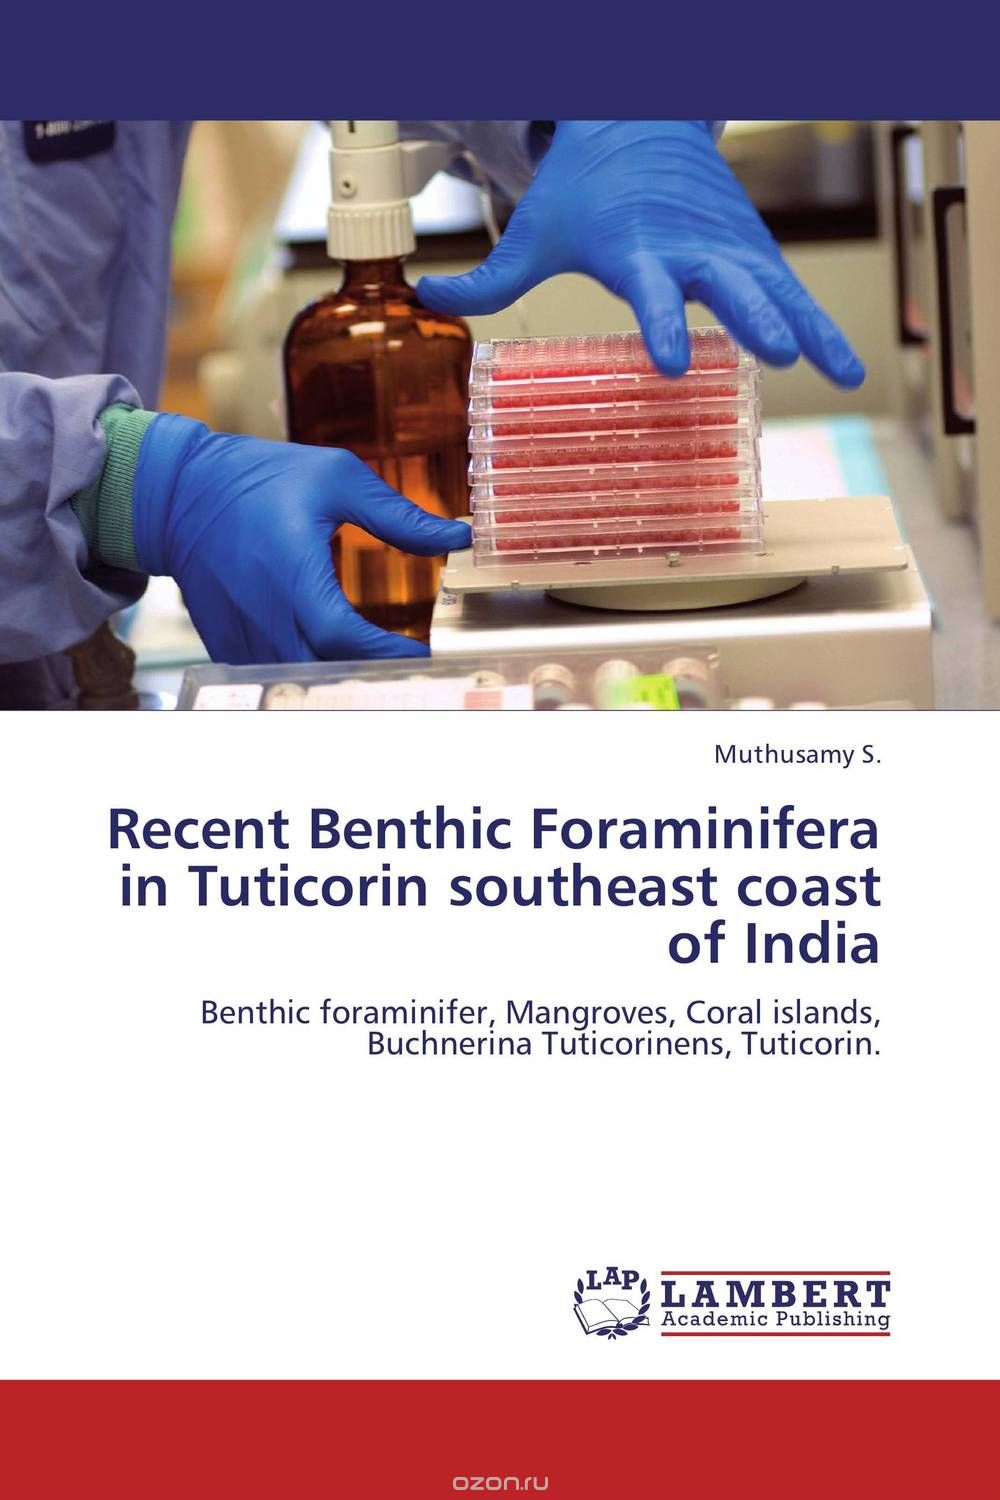 Скачать книгу "Recent Benthic Foraminifera in Tuticorin southeast coast of India"